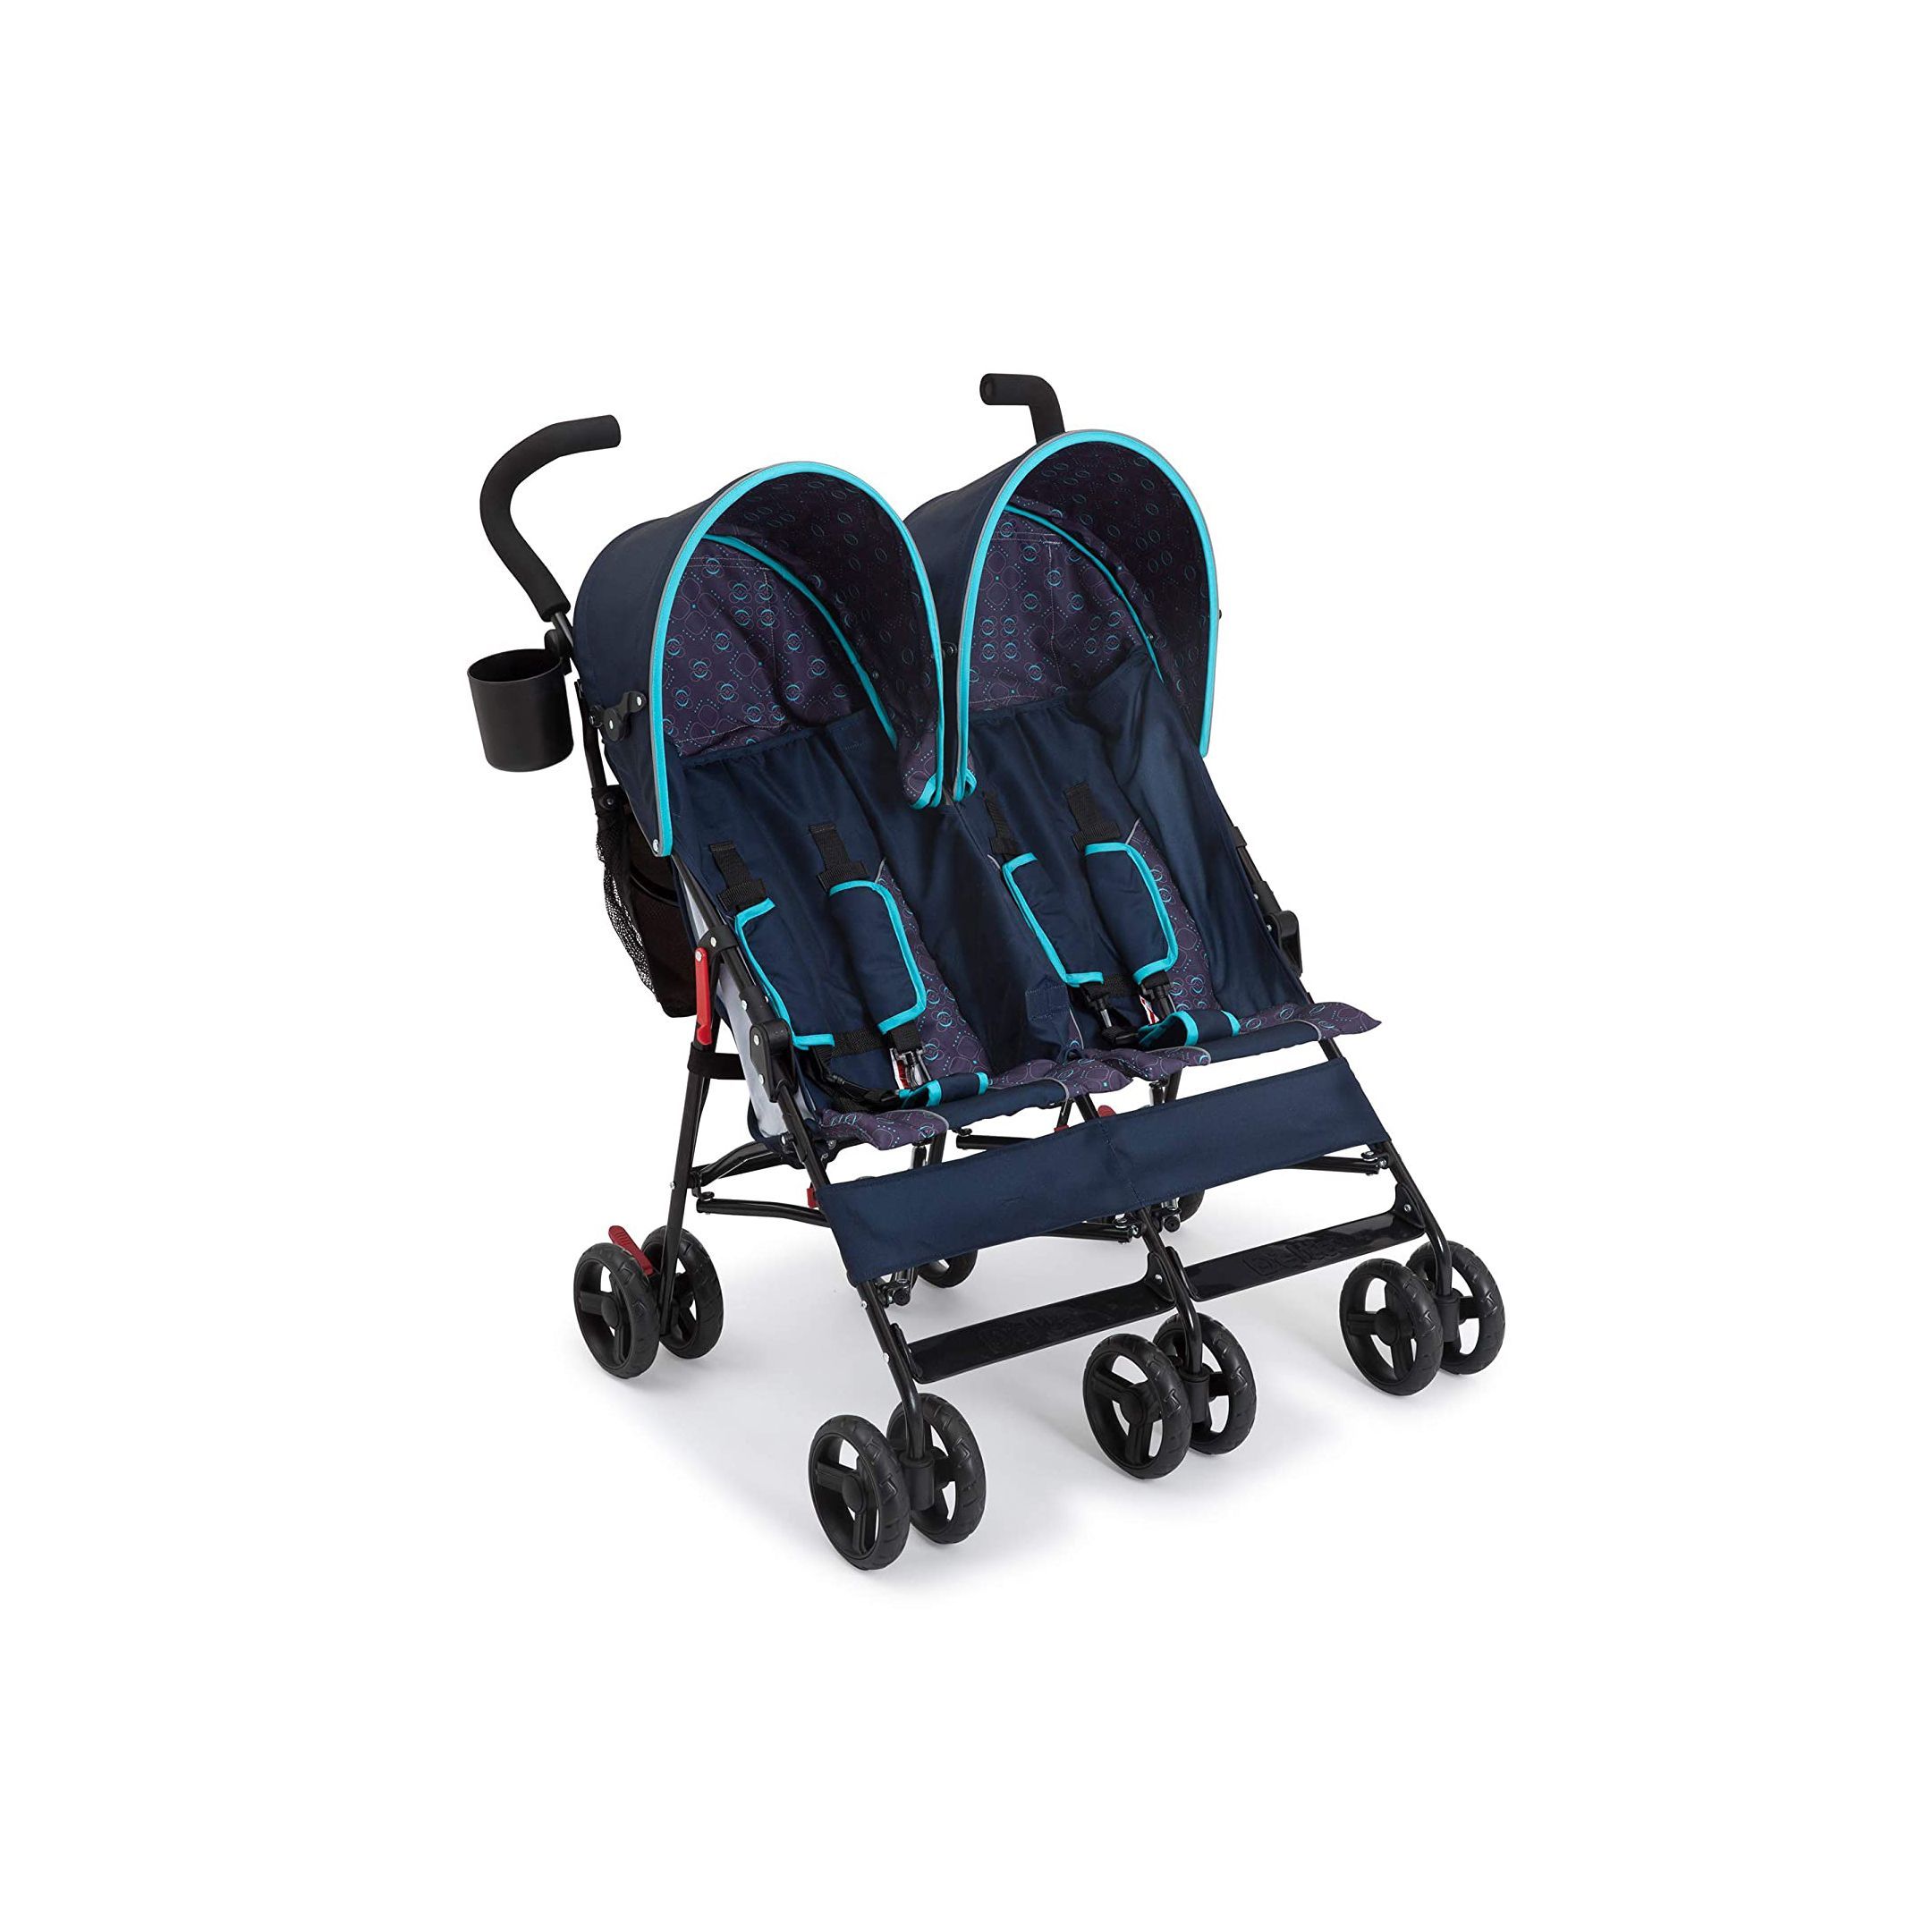 Tandem Strollers For Infants Toddlers, Best Double Stroller For Infant Car Seat And Toddler Carrier